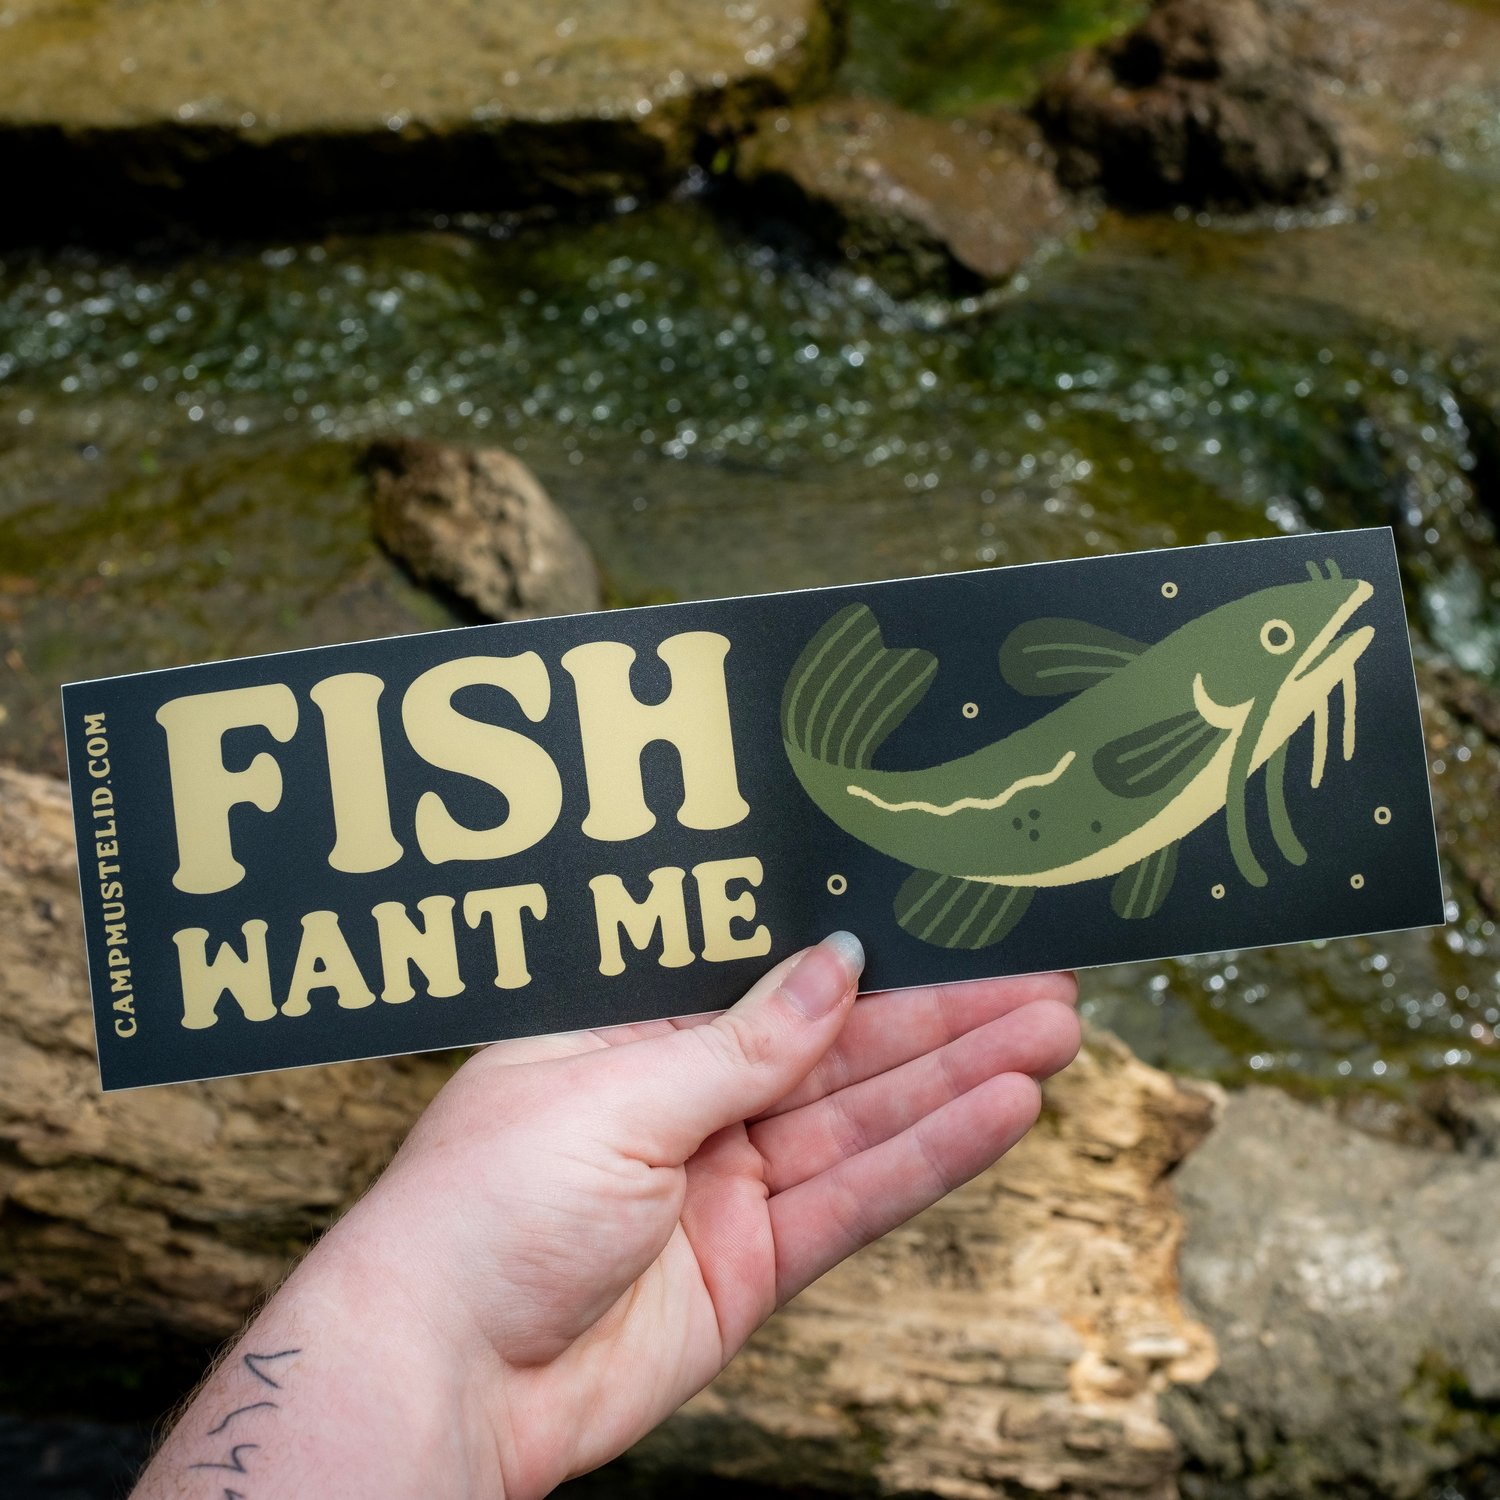 CATFISH "Fish Want Me" Bumper Sticker